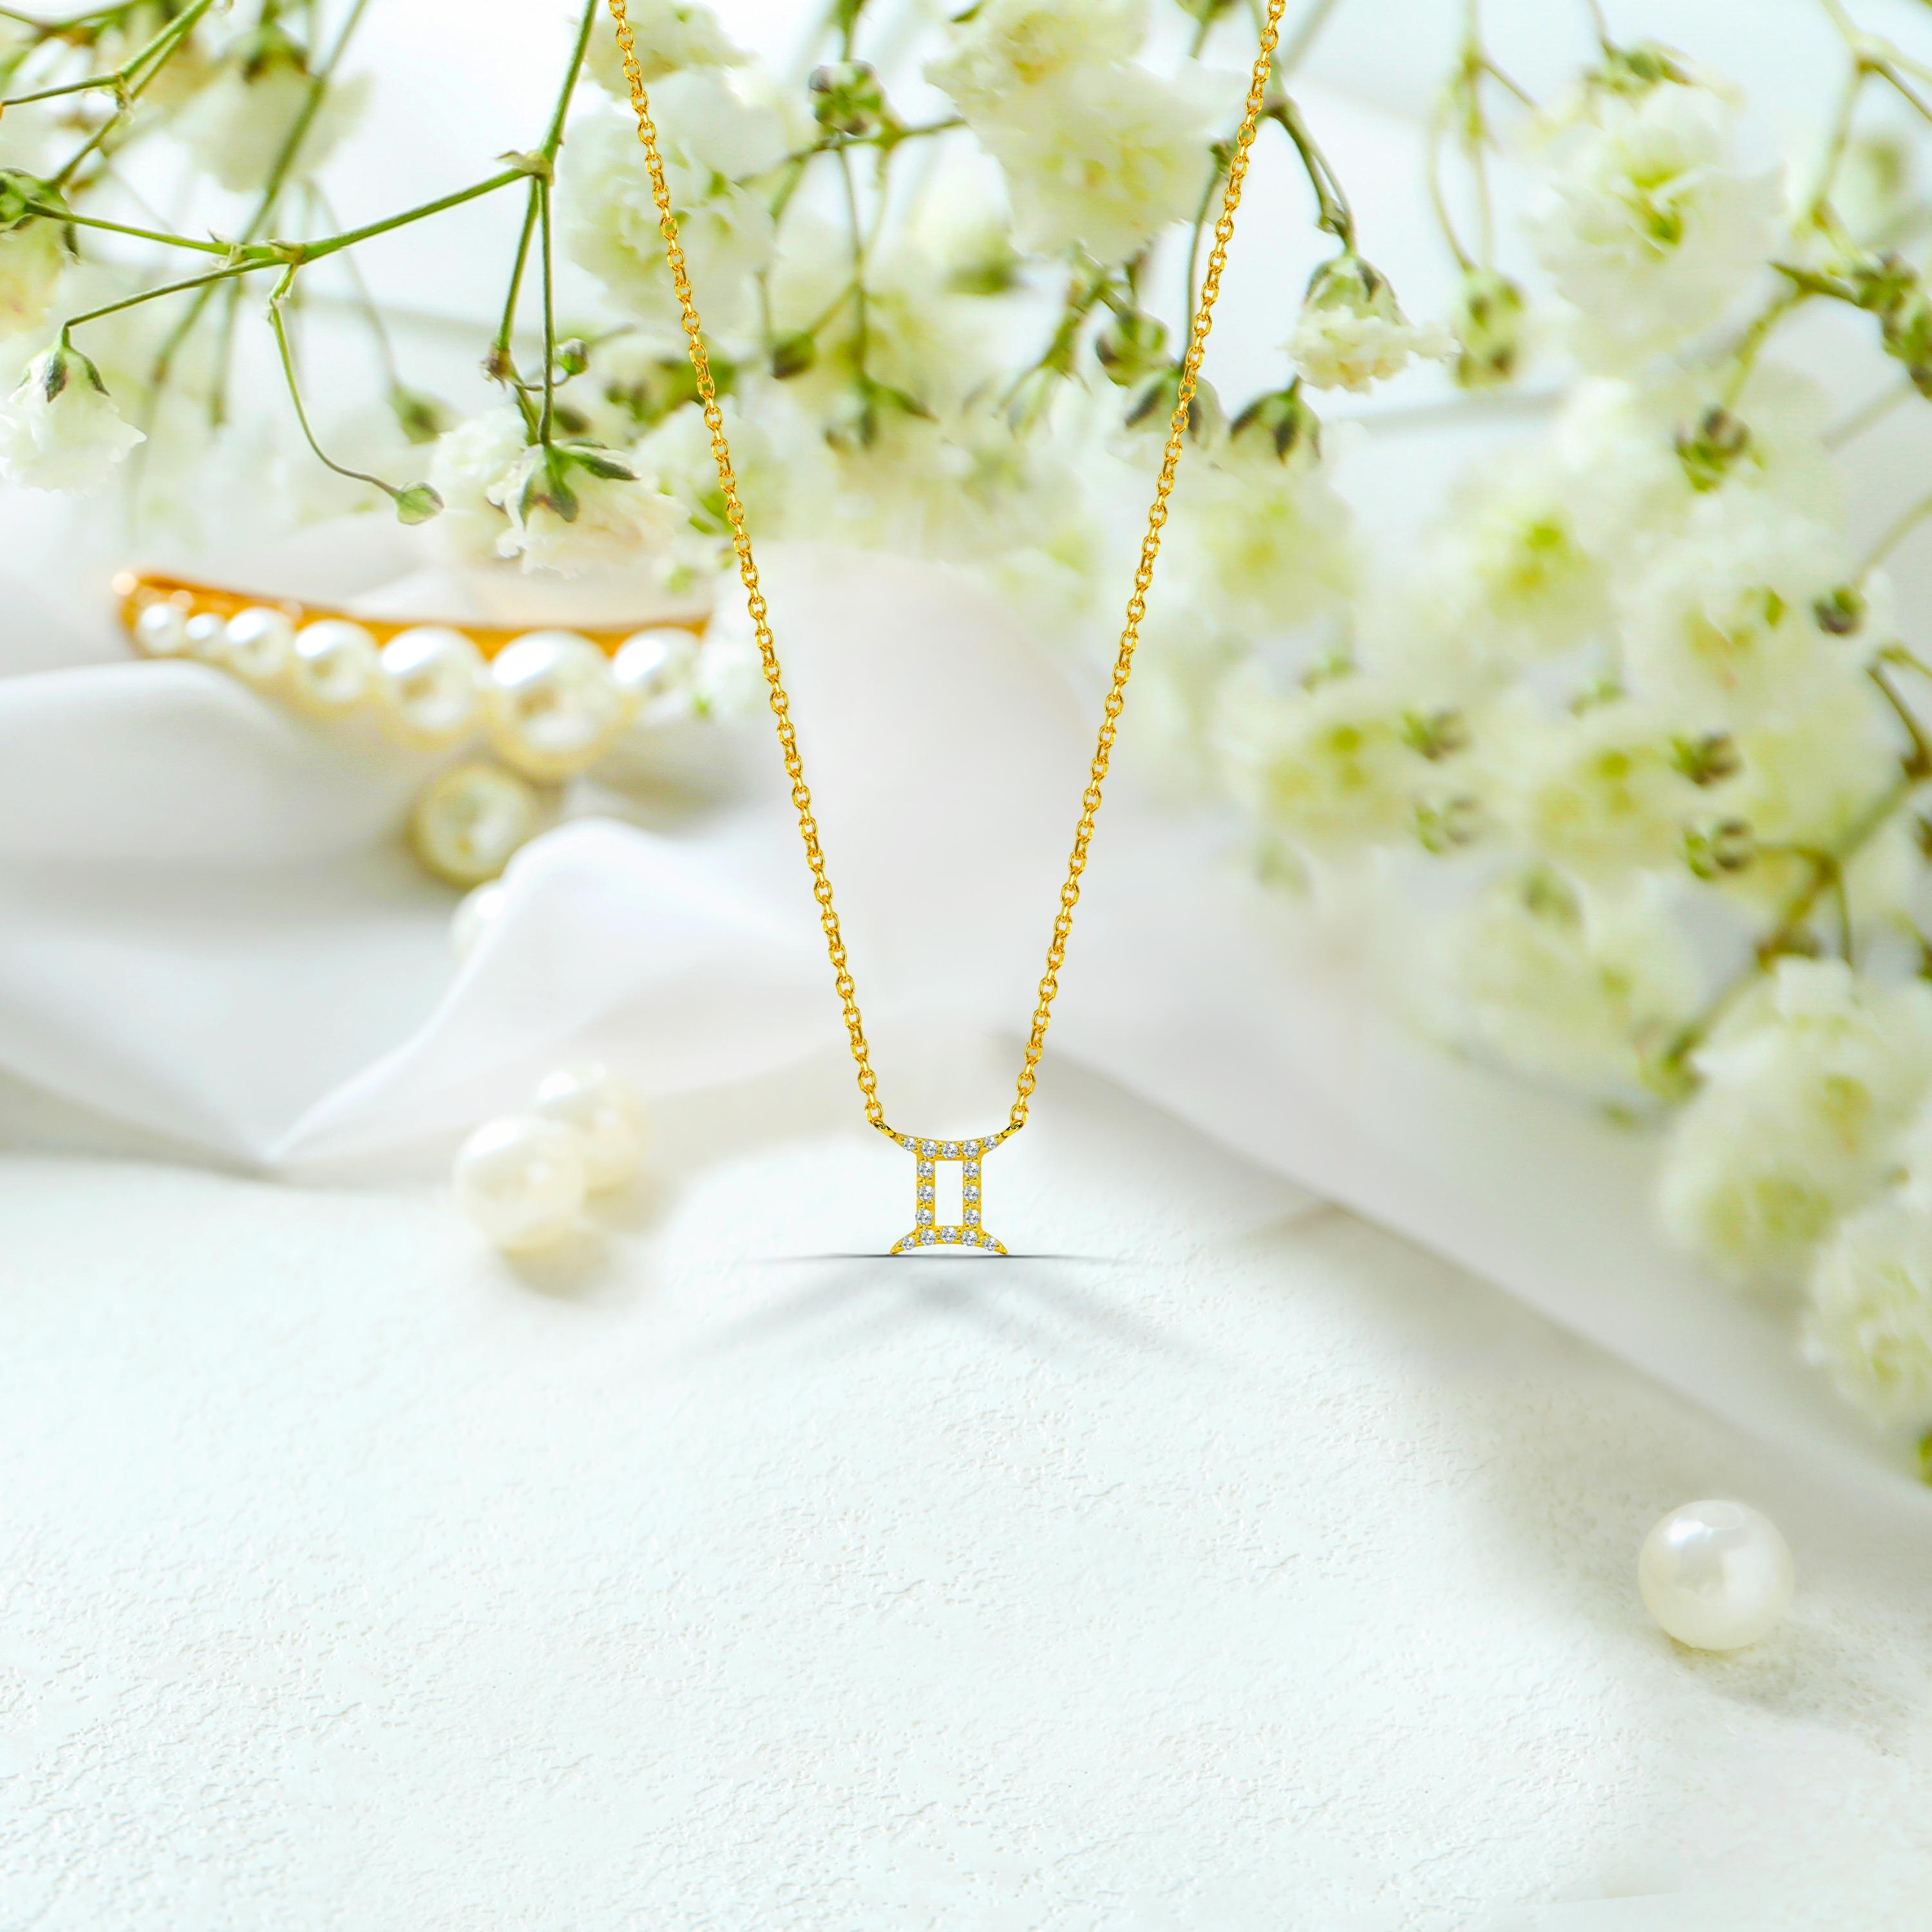 gemini swarovski necklace